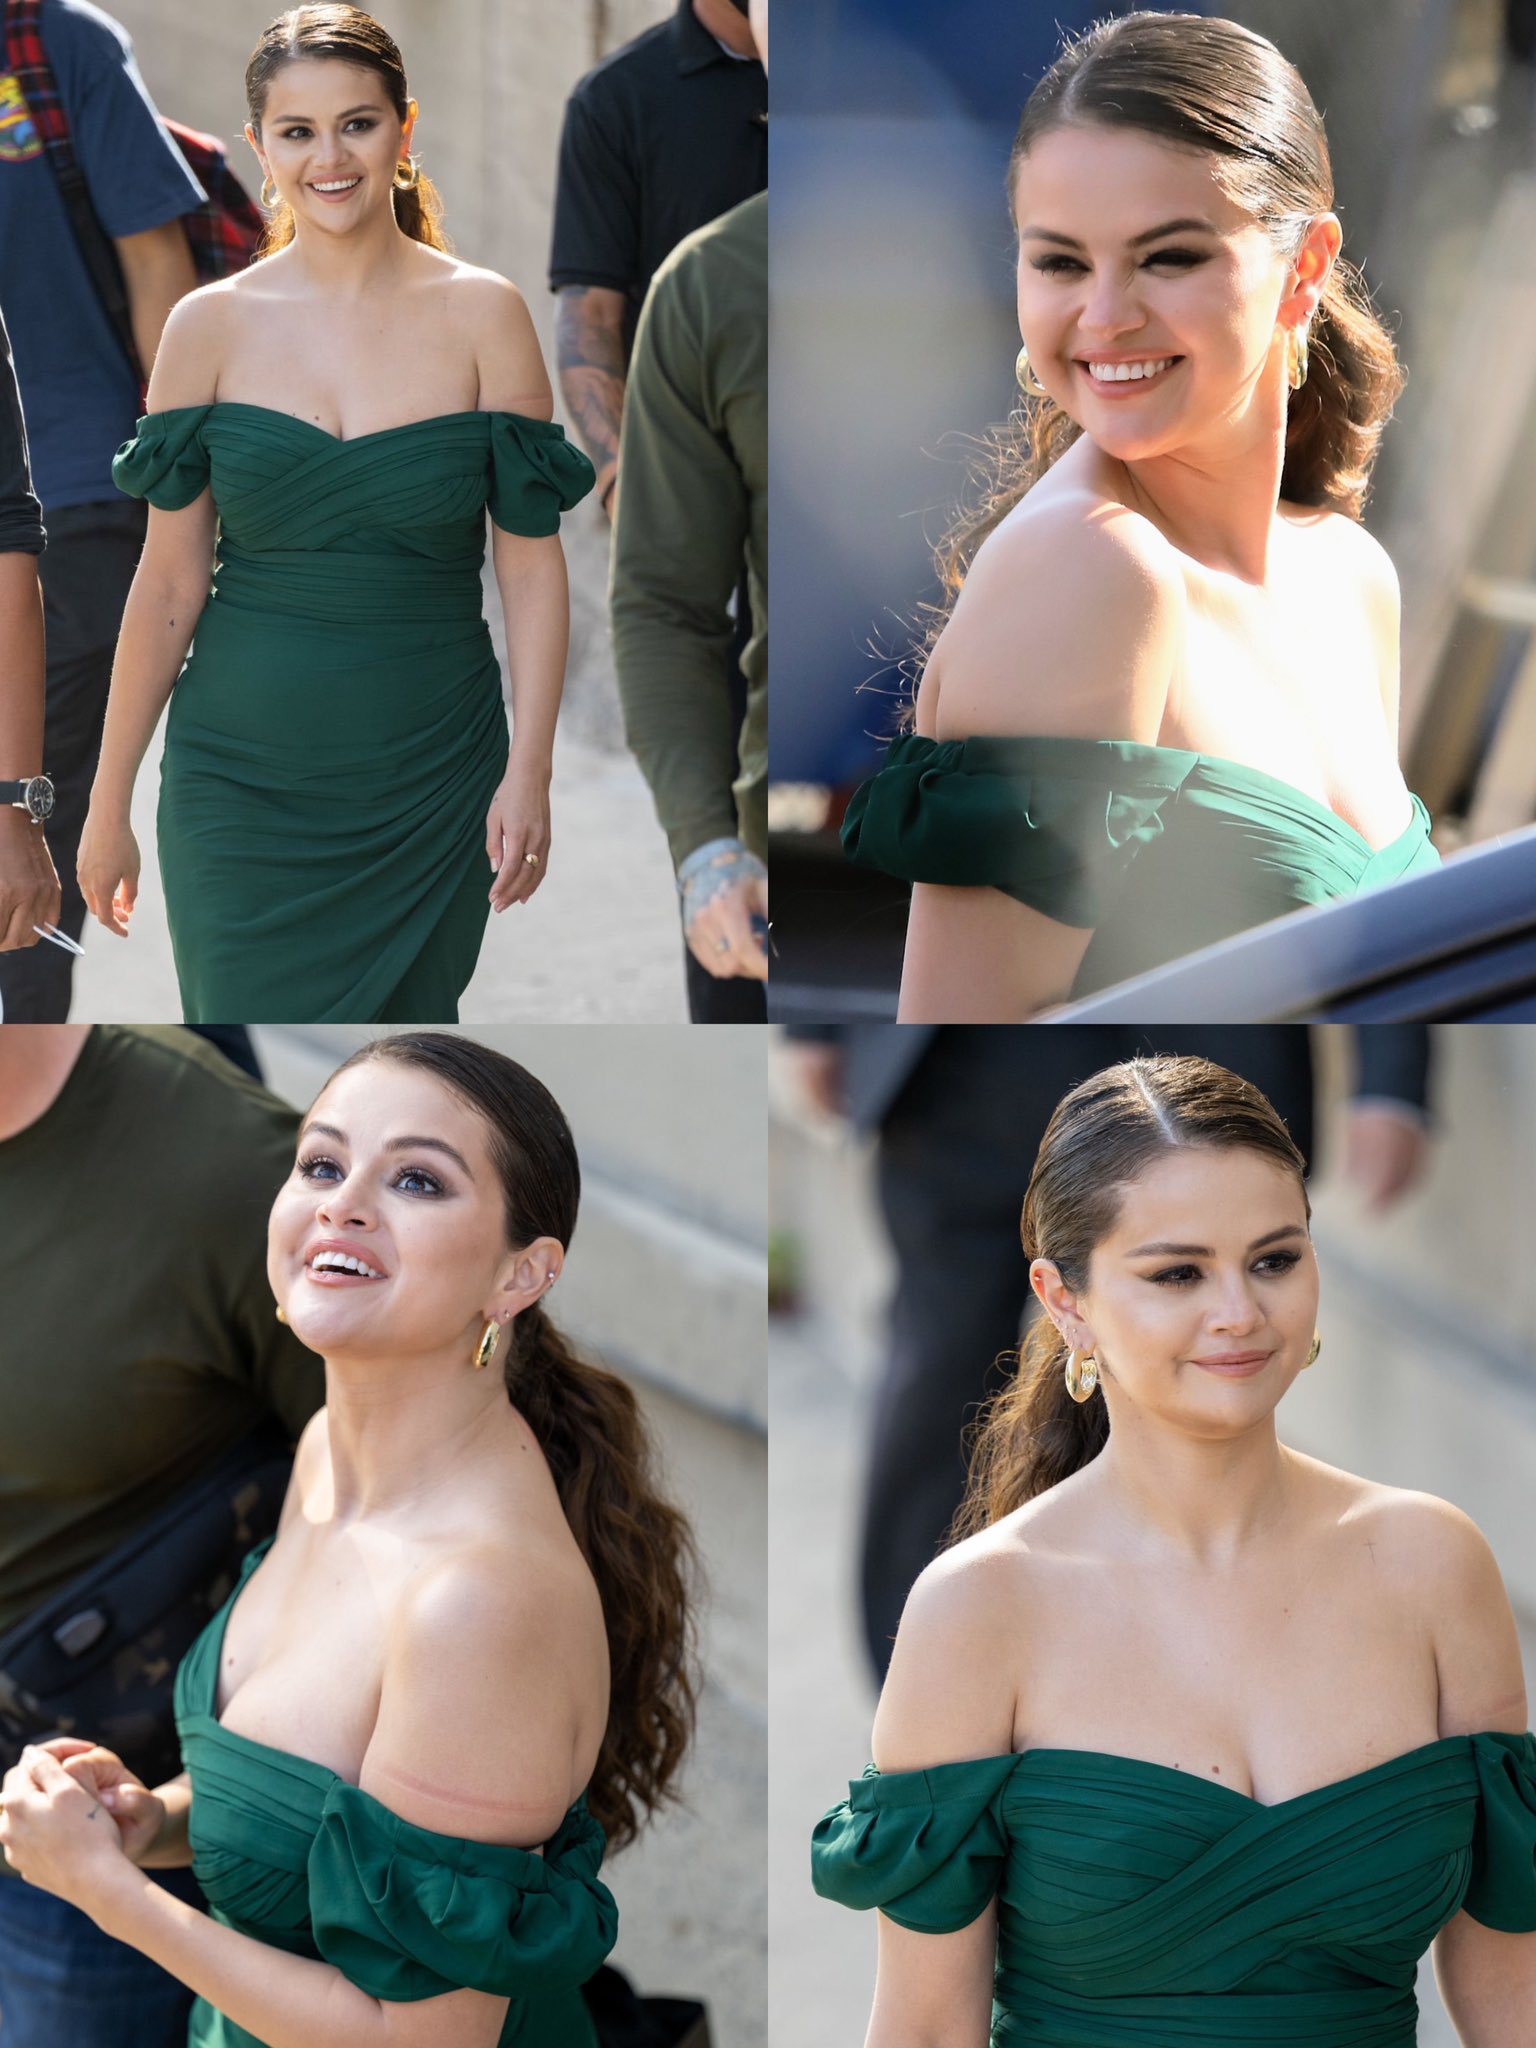 sg throwbacks | FAN ACCOUNT on X: "June 15, 2022: Selena Gomez leaving Jimmy Kimmel Live in Los Angeles, California. https://t.co/VzfFPr7mjK" / X